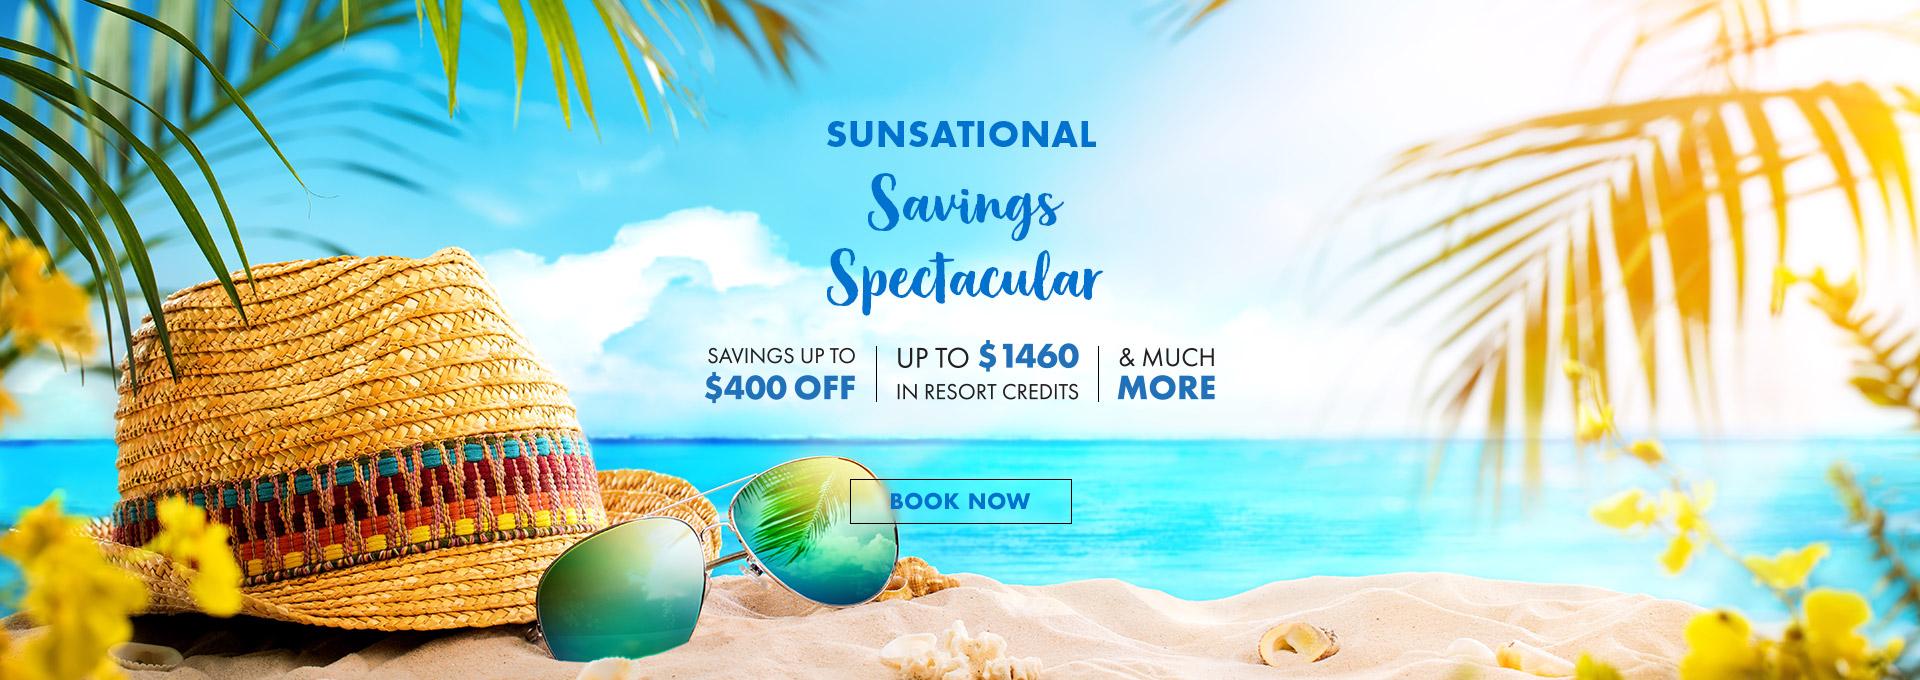 Sunsational Savings Spectacular